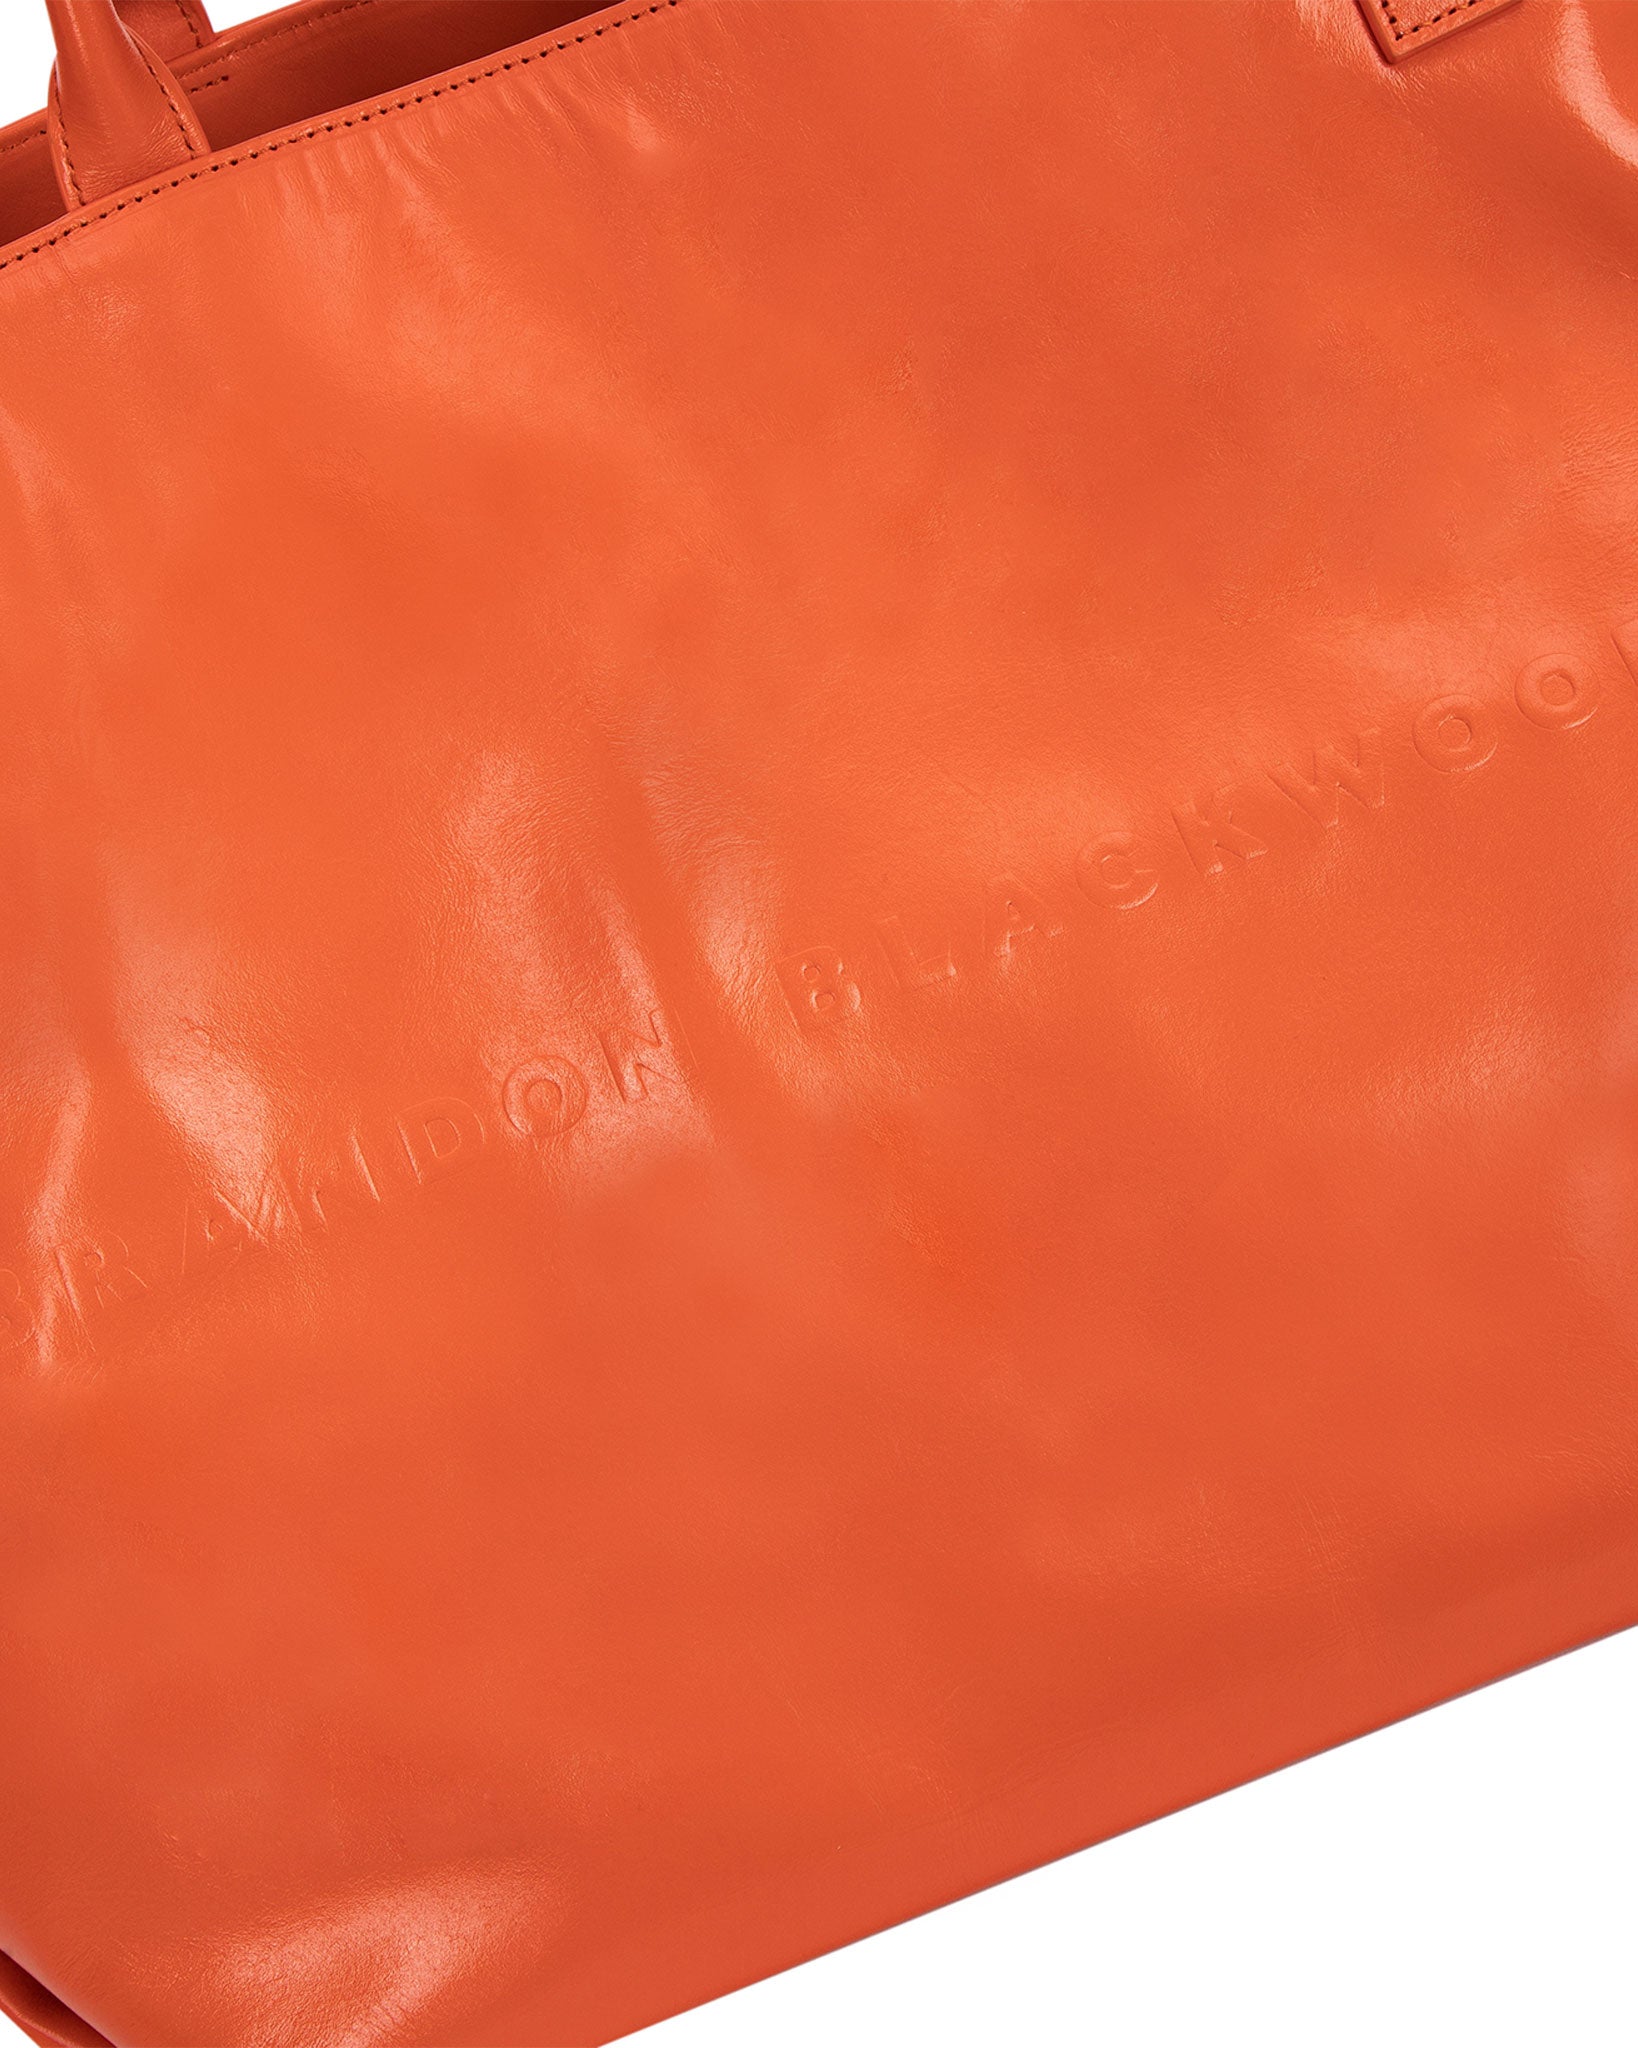 Brandon Blackwood New York - Everyday Tote - Burnt Orange Leather